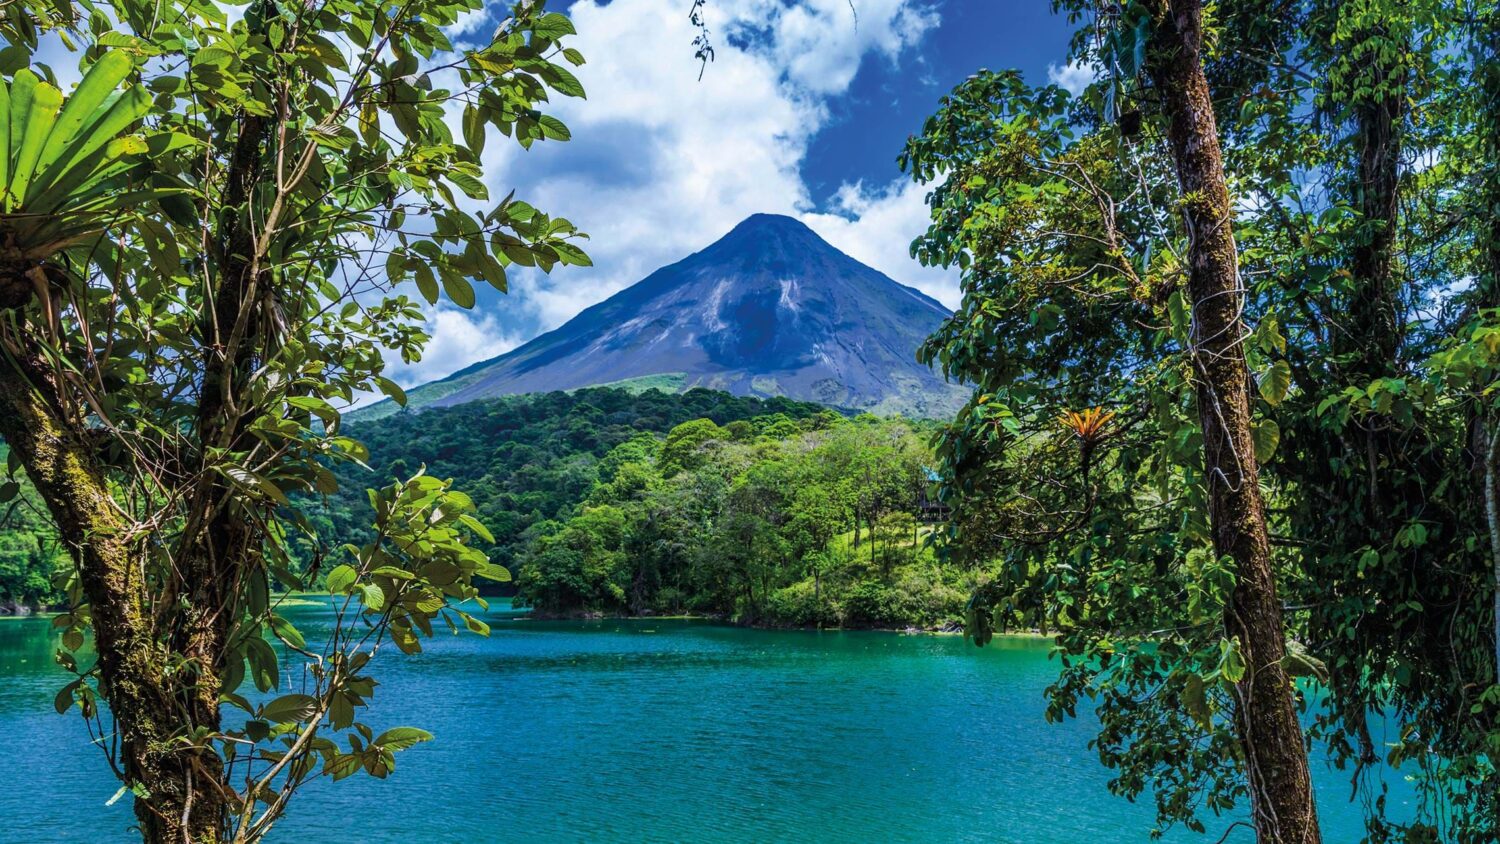 Tropical vegetation and ocean views of Costa Rica